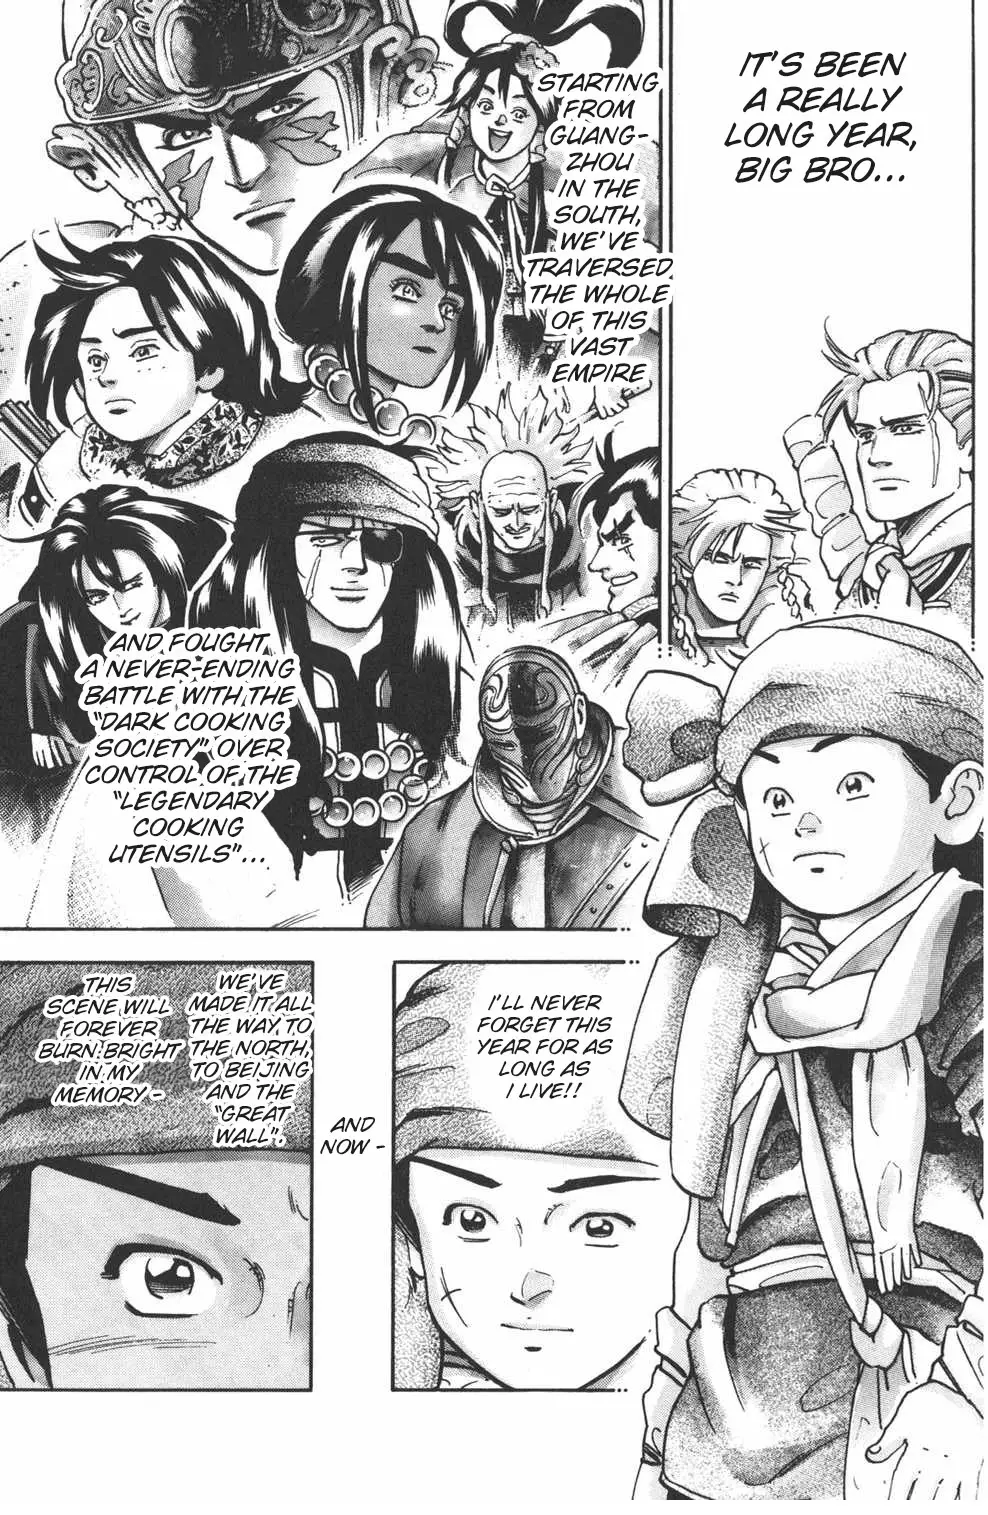 Shin Chuuka Ichiban! - 102 page 1-2ce3b8ba